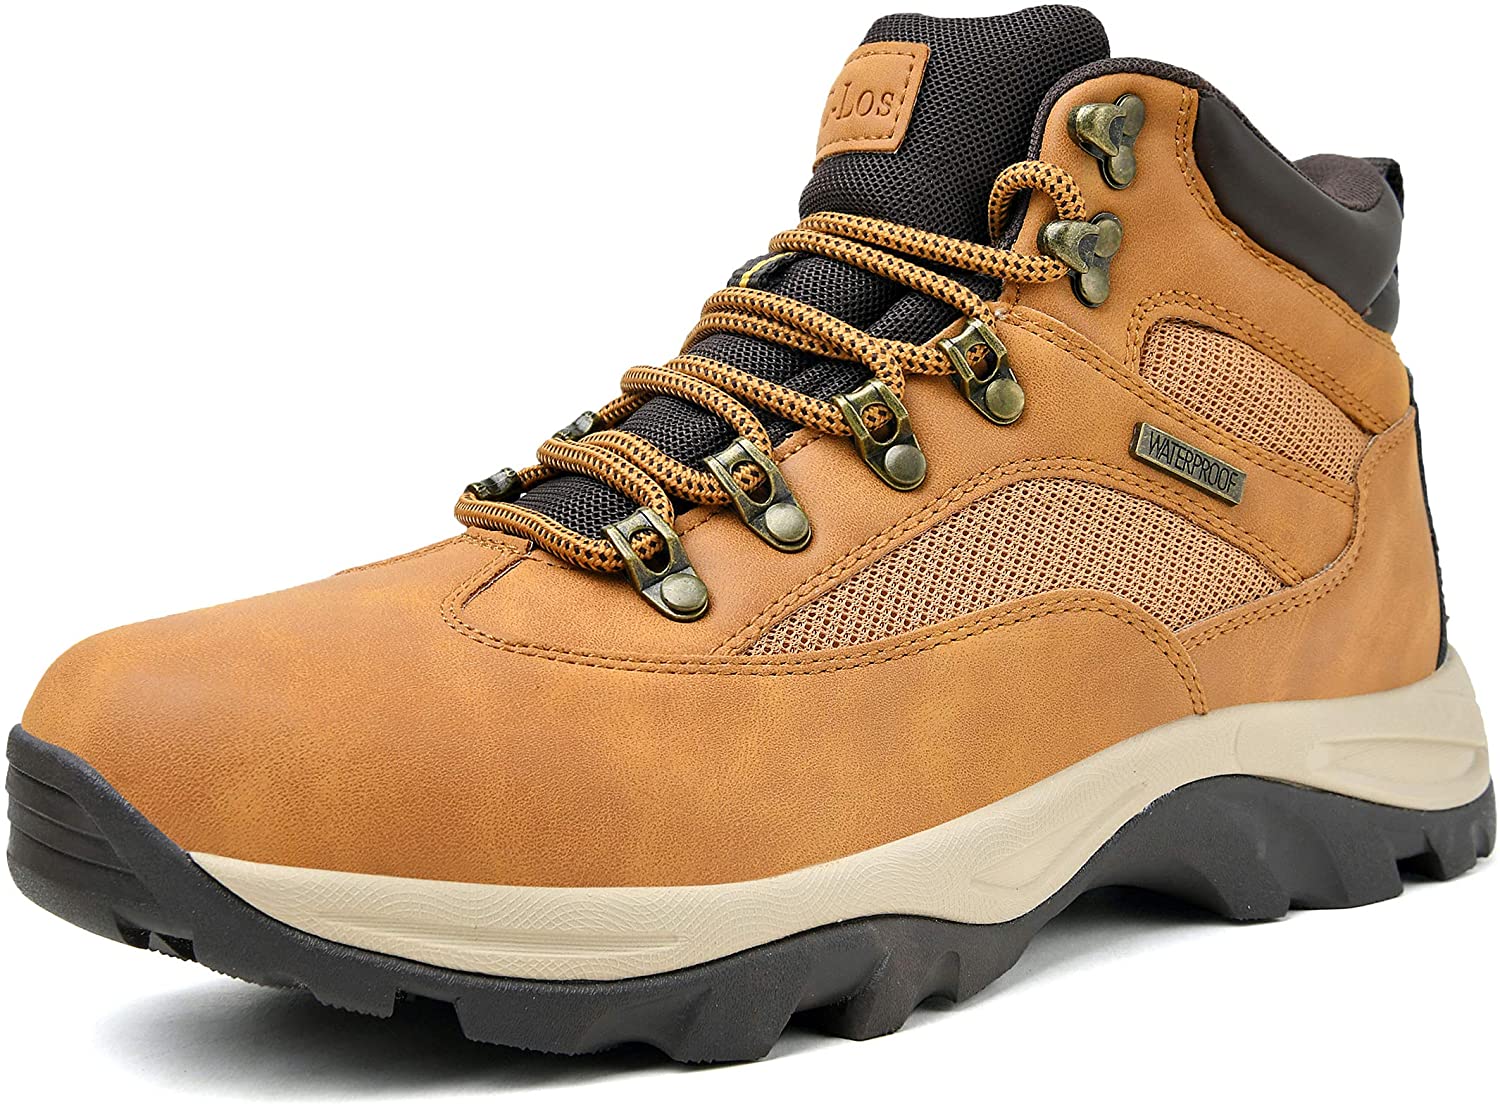 CC-Los Men's Hiking Shoes 5-Year Warranty Waterproof Low-Top Outdoor Trailing Trekking Camping Shoe Shock-Absorbing EVA Casual Lightweight 